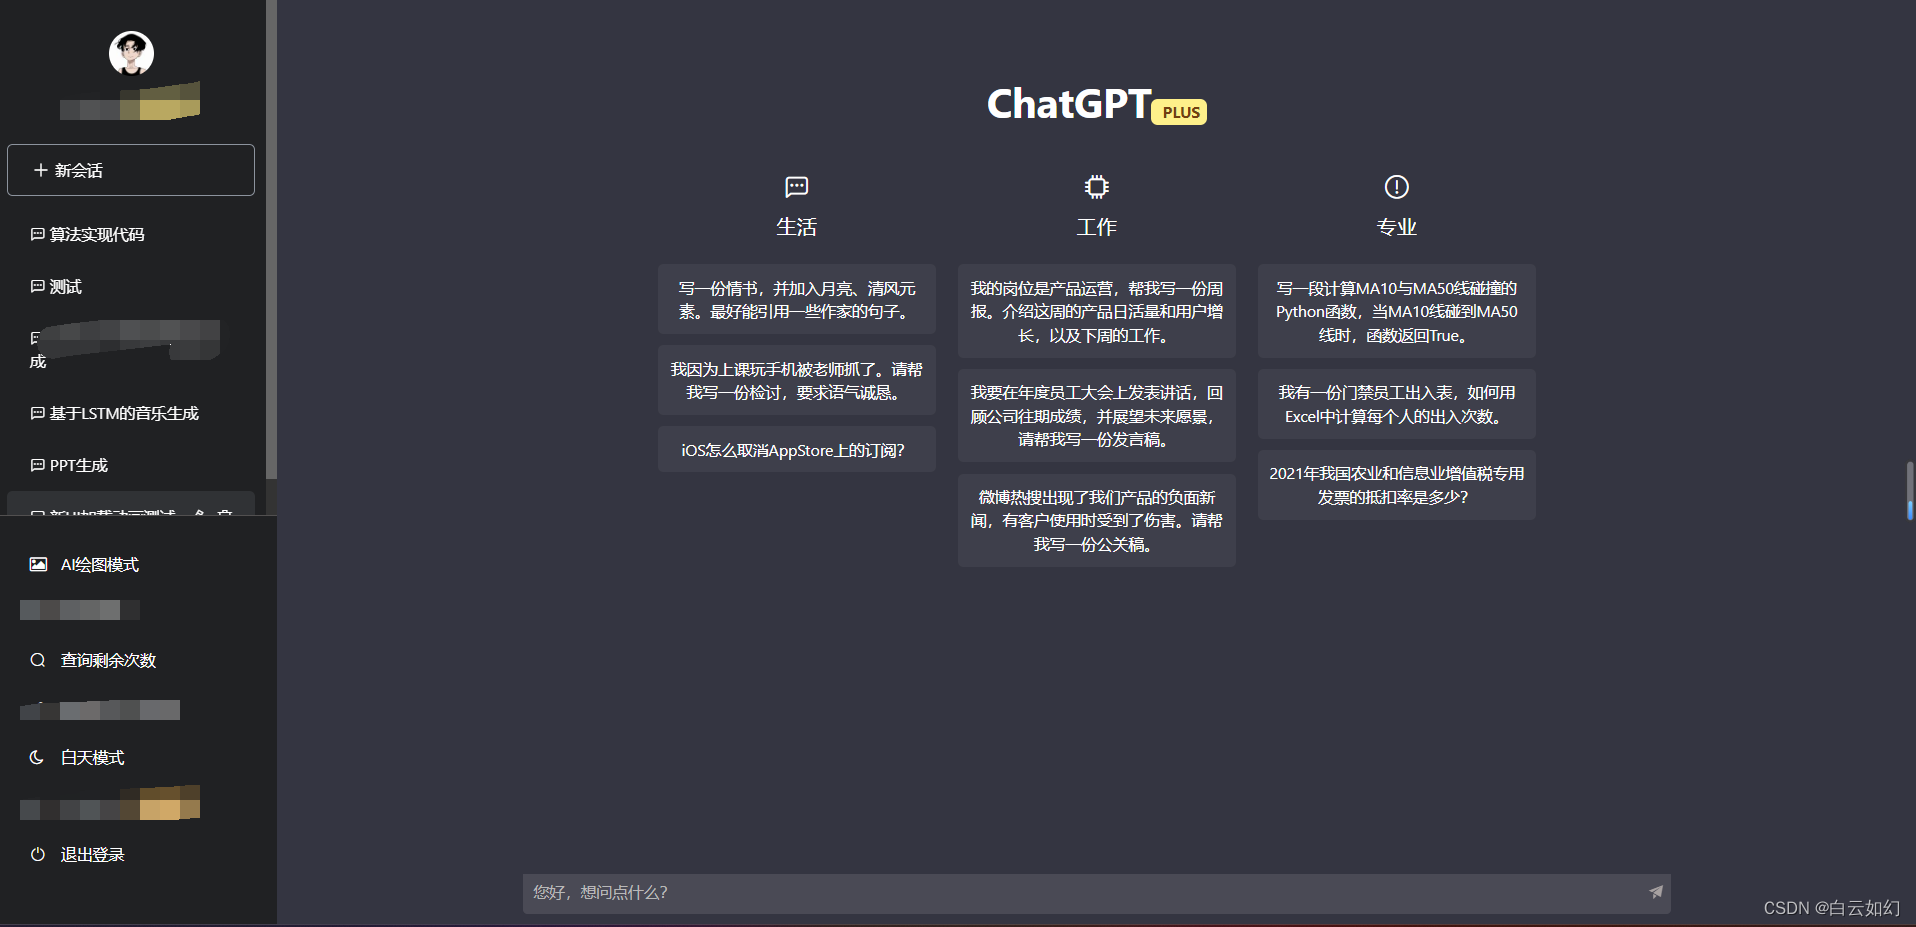 ChatGPT website source code operating version